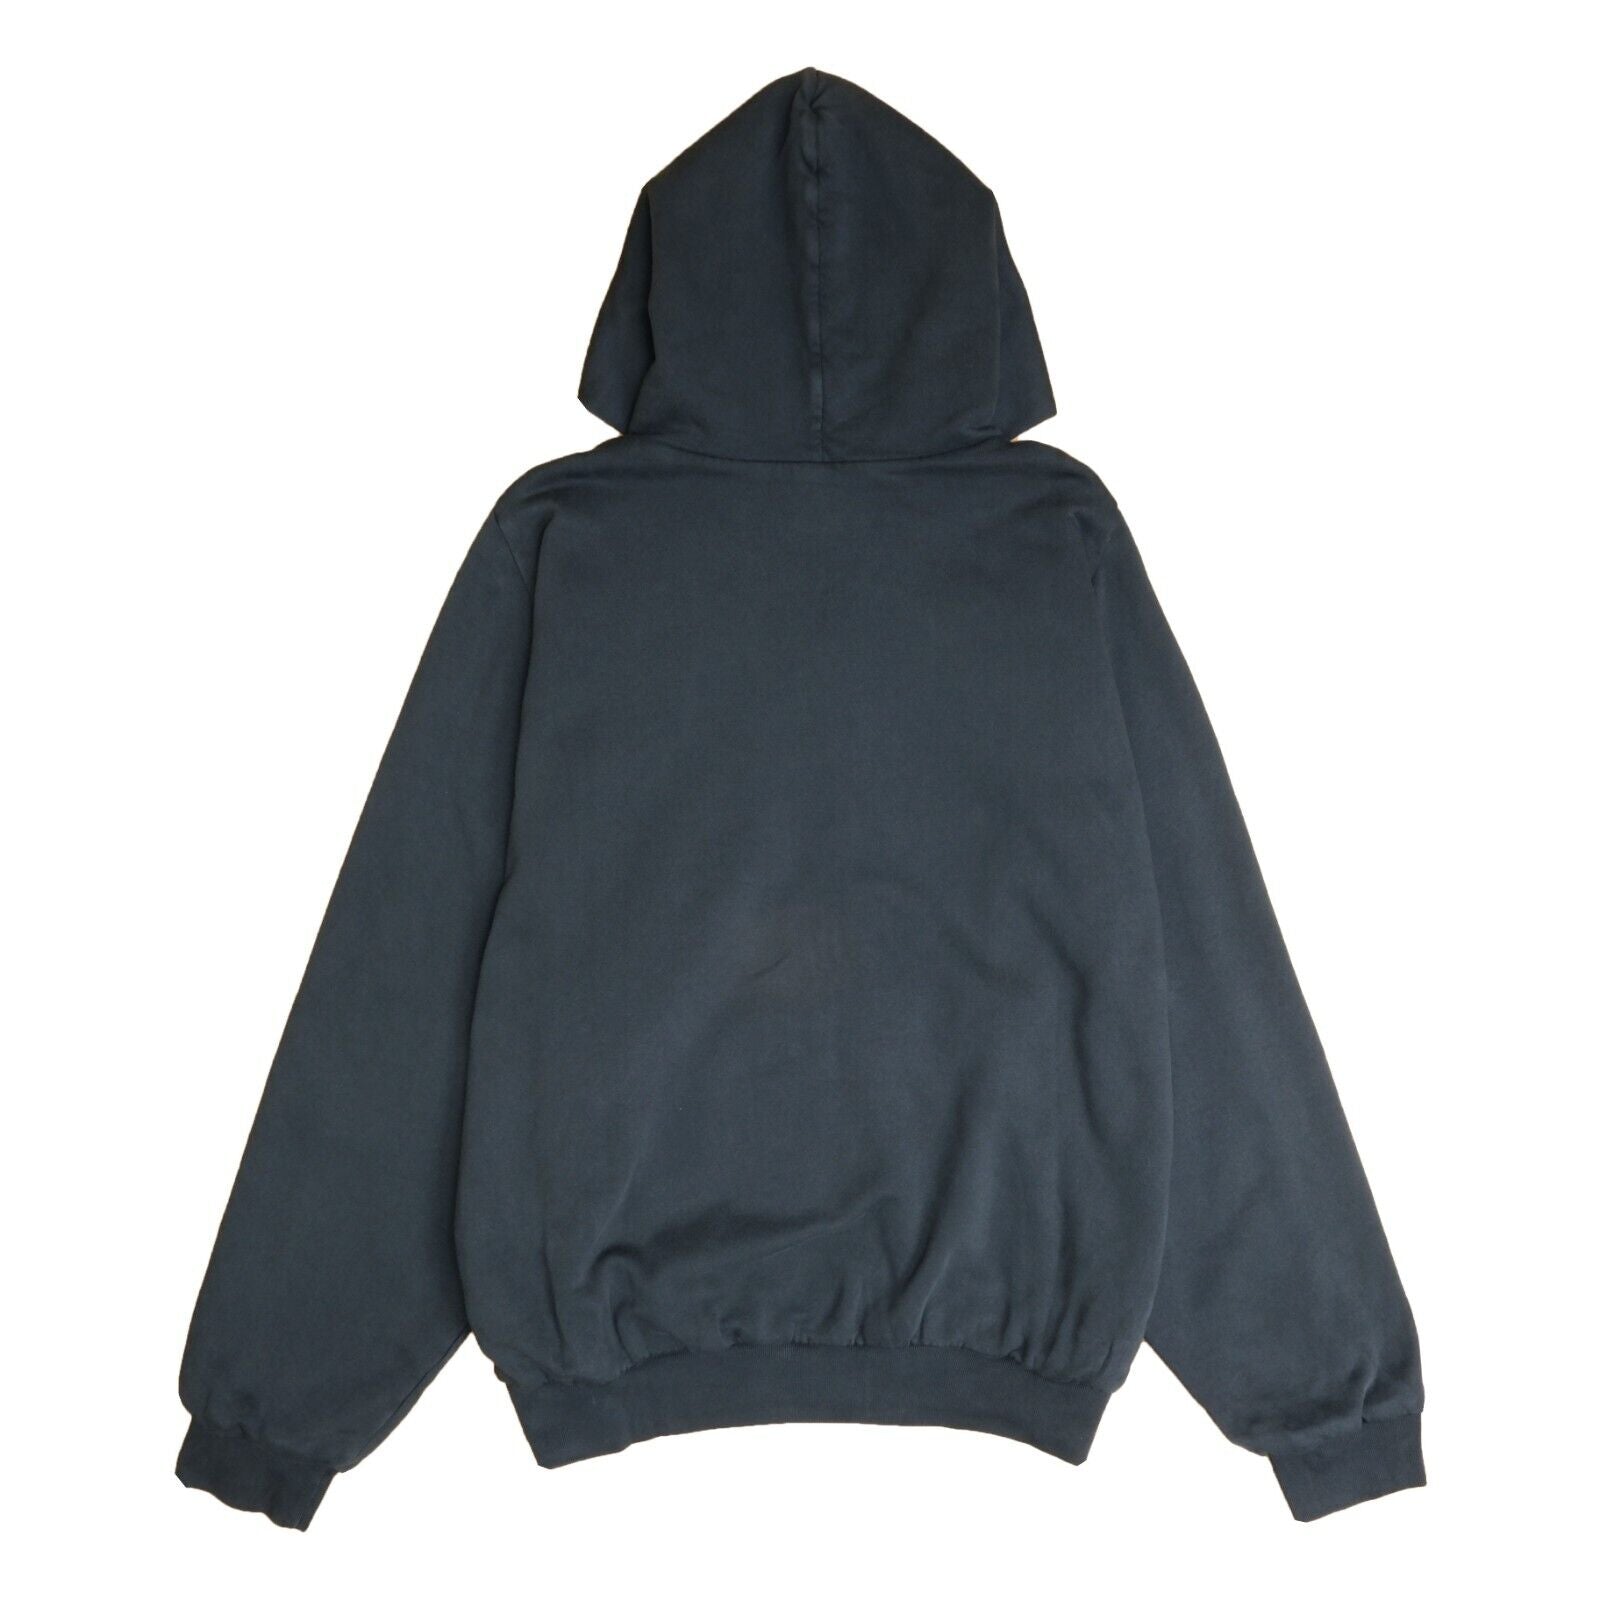 Yeezy Gap Unreleased Zip Sweatshirt Hoodie Size XL Black